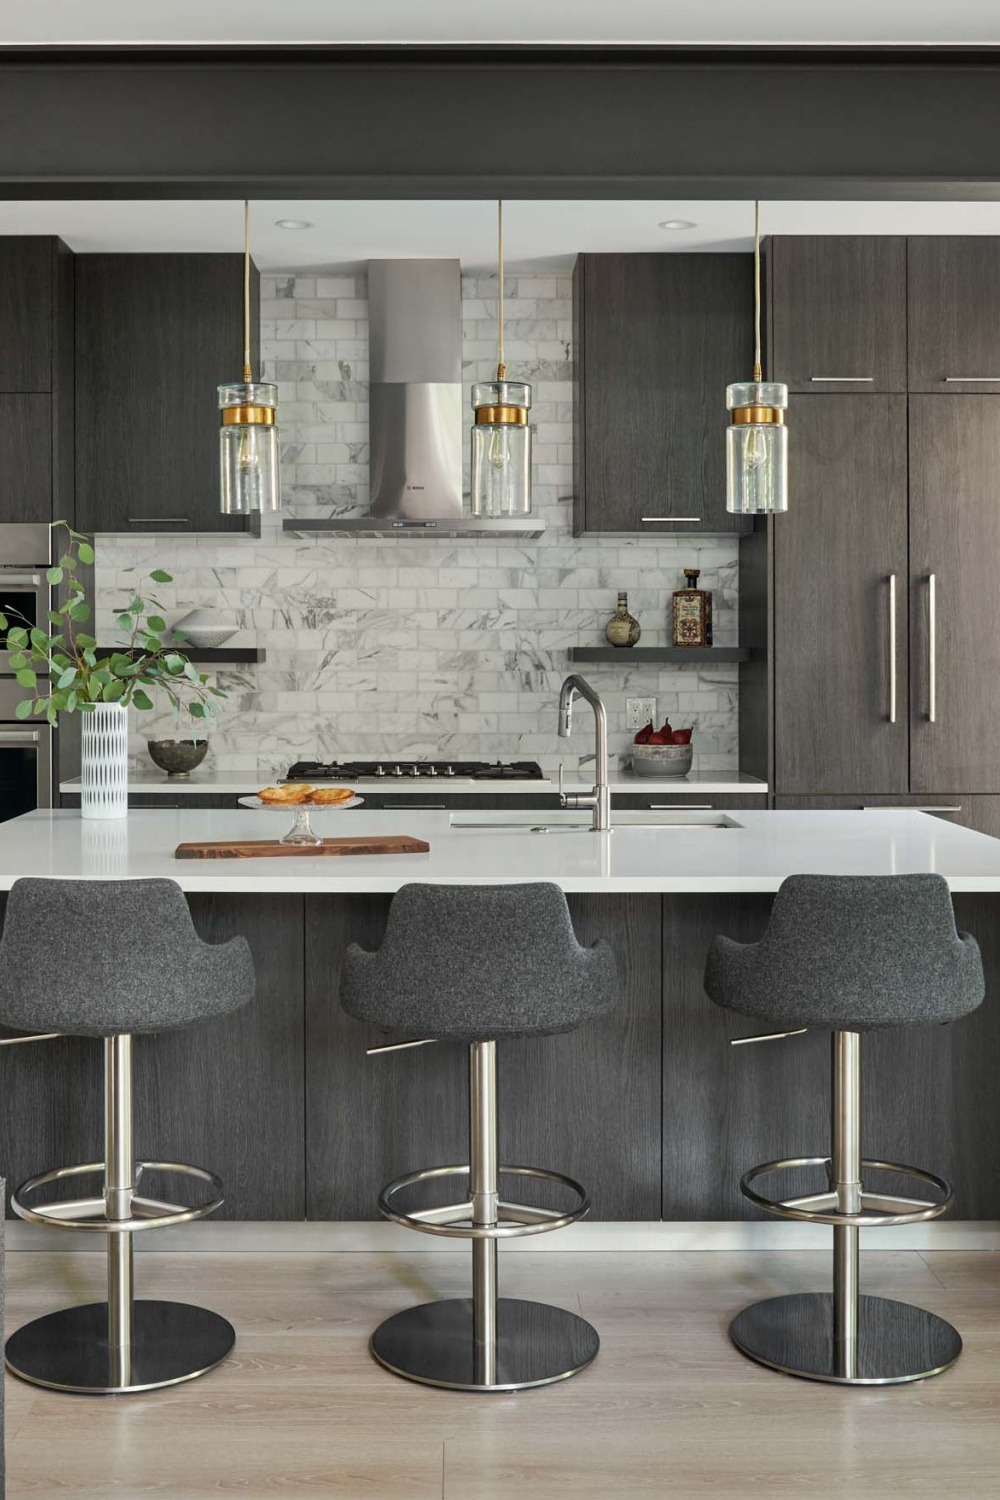 Stainless Steel Appliances Kitchen With Black Cabinets Kitchen Island Black Kitchen Design Style Light Room